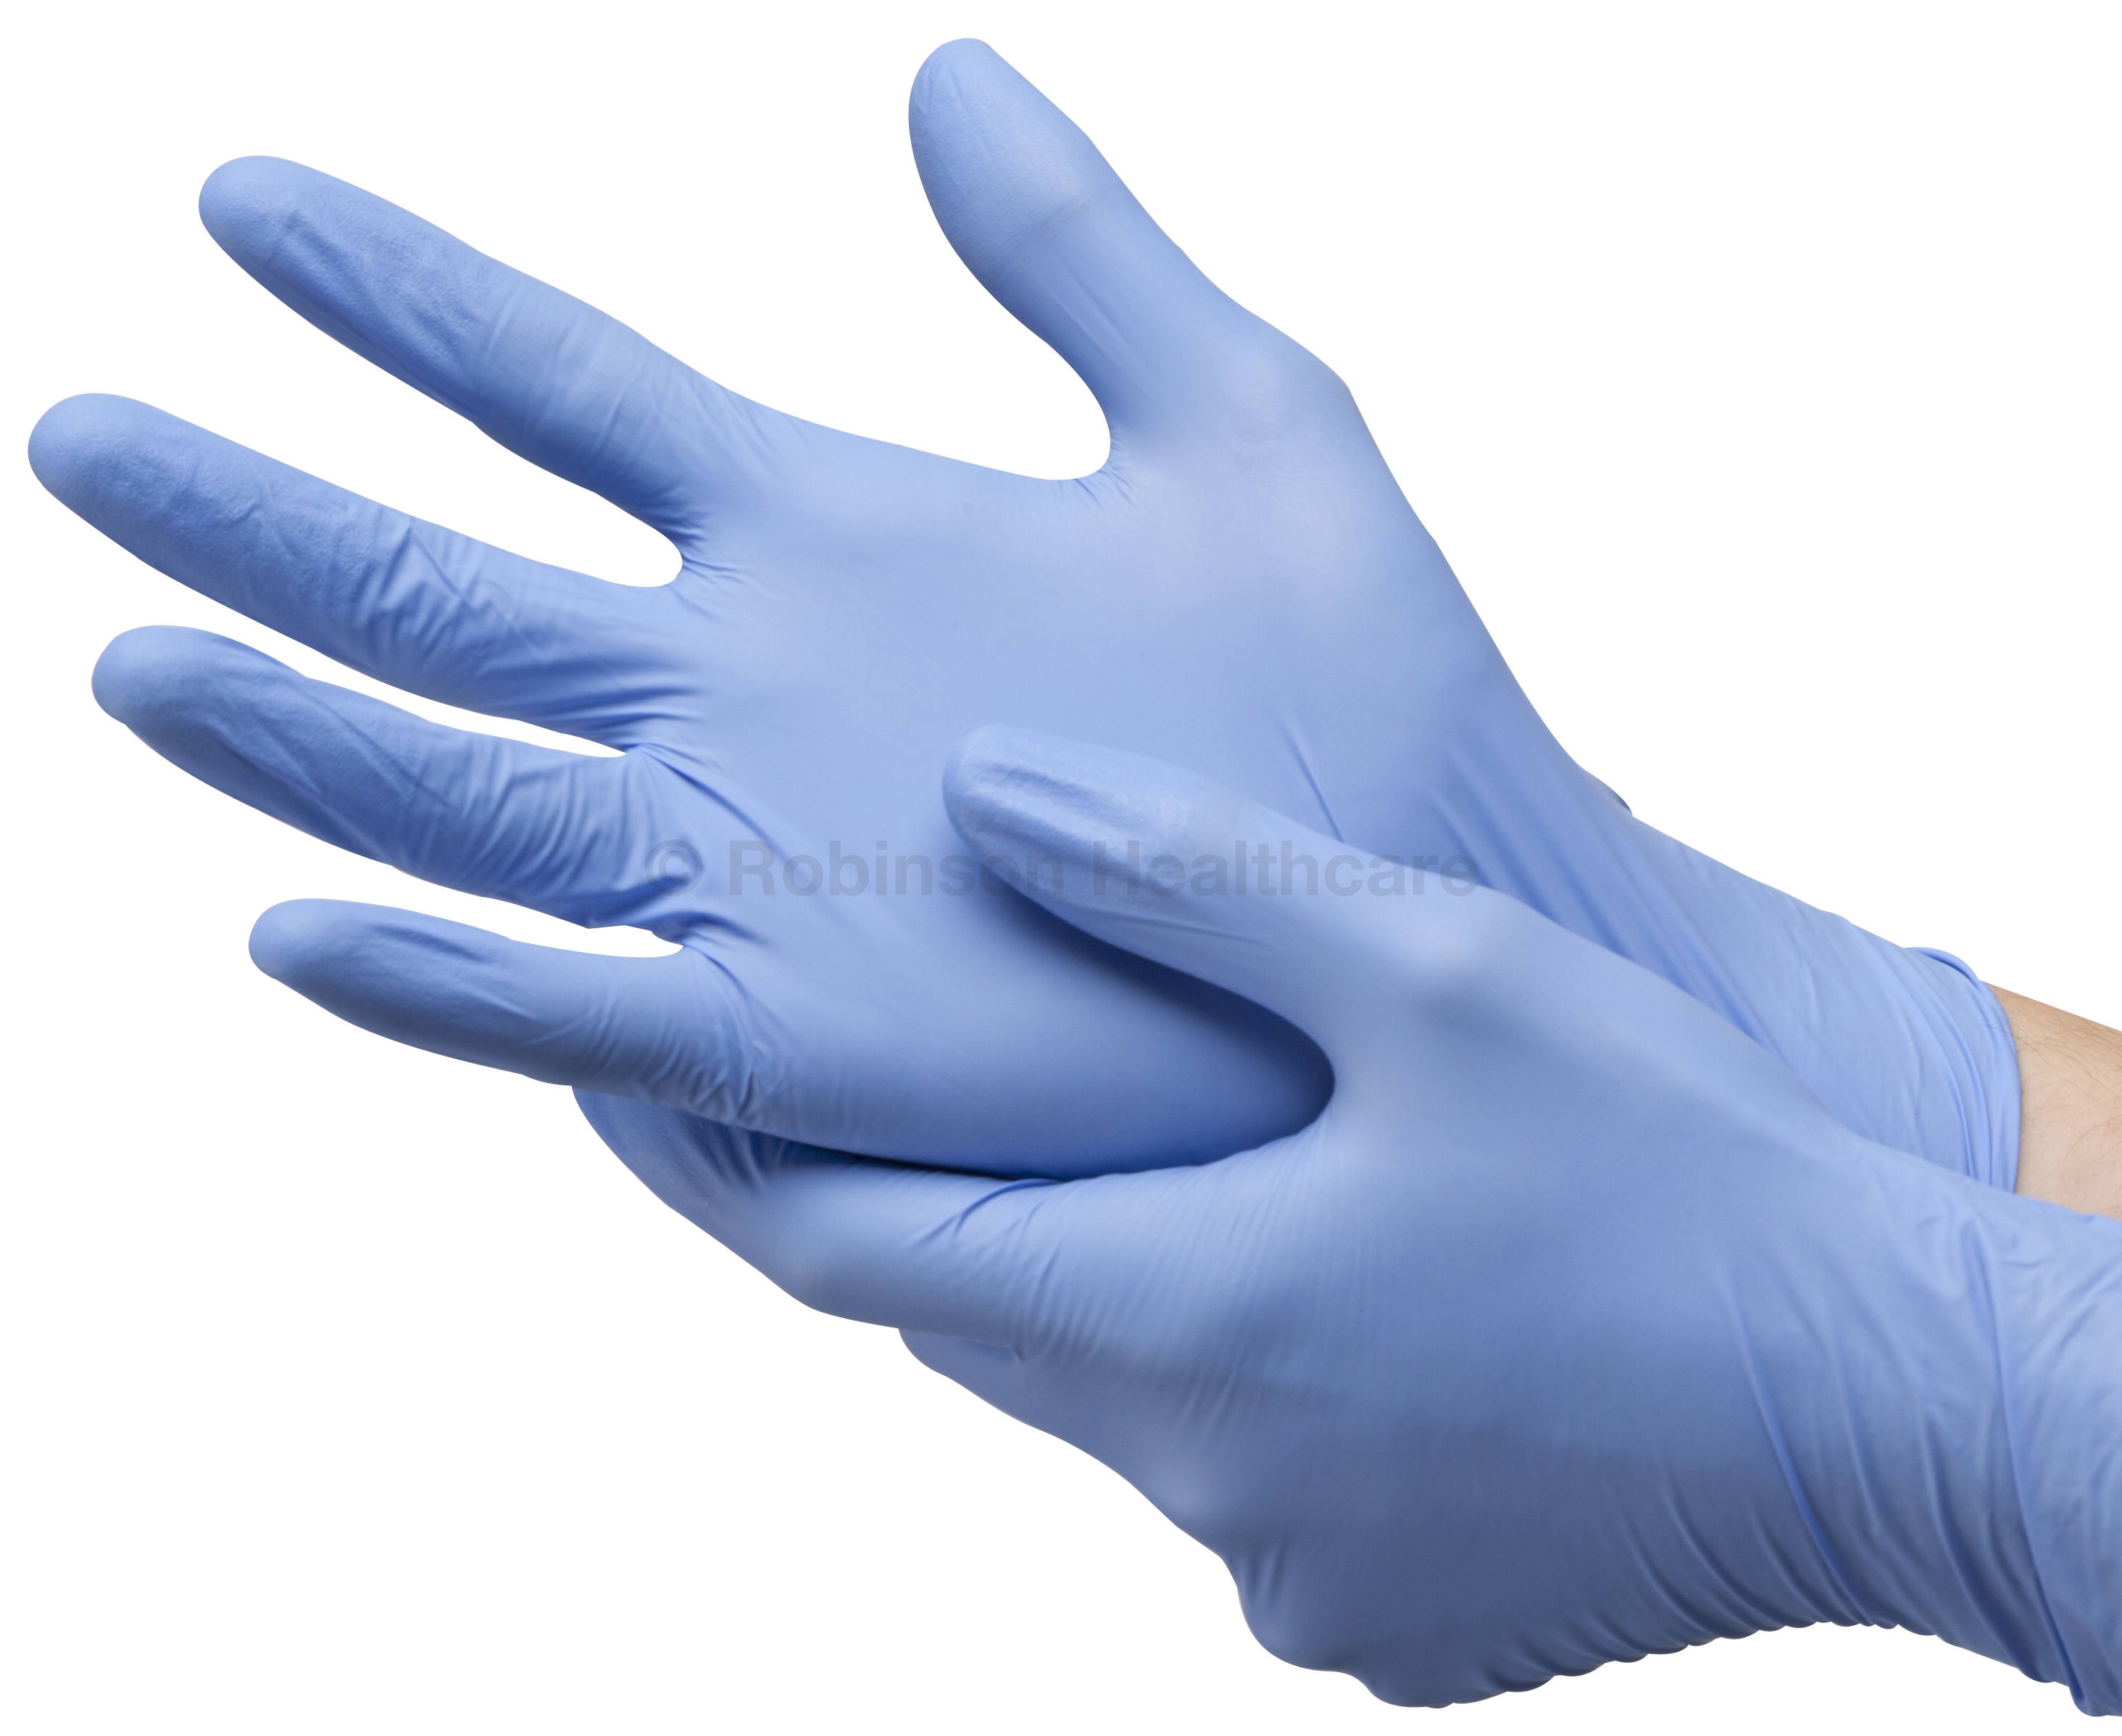 Hospital gloves clipart.